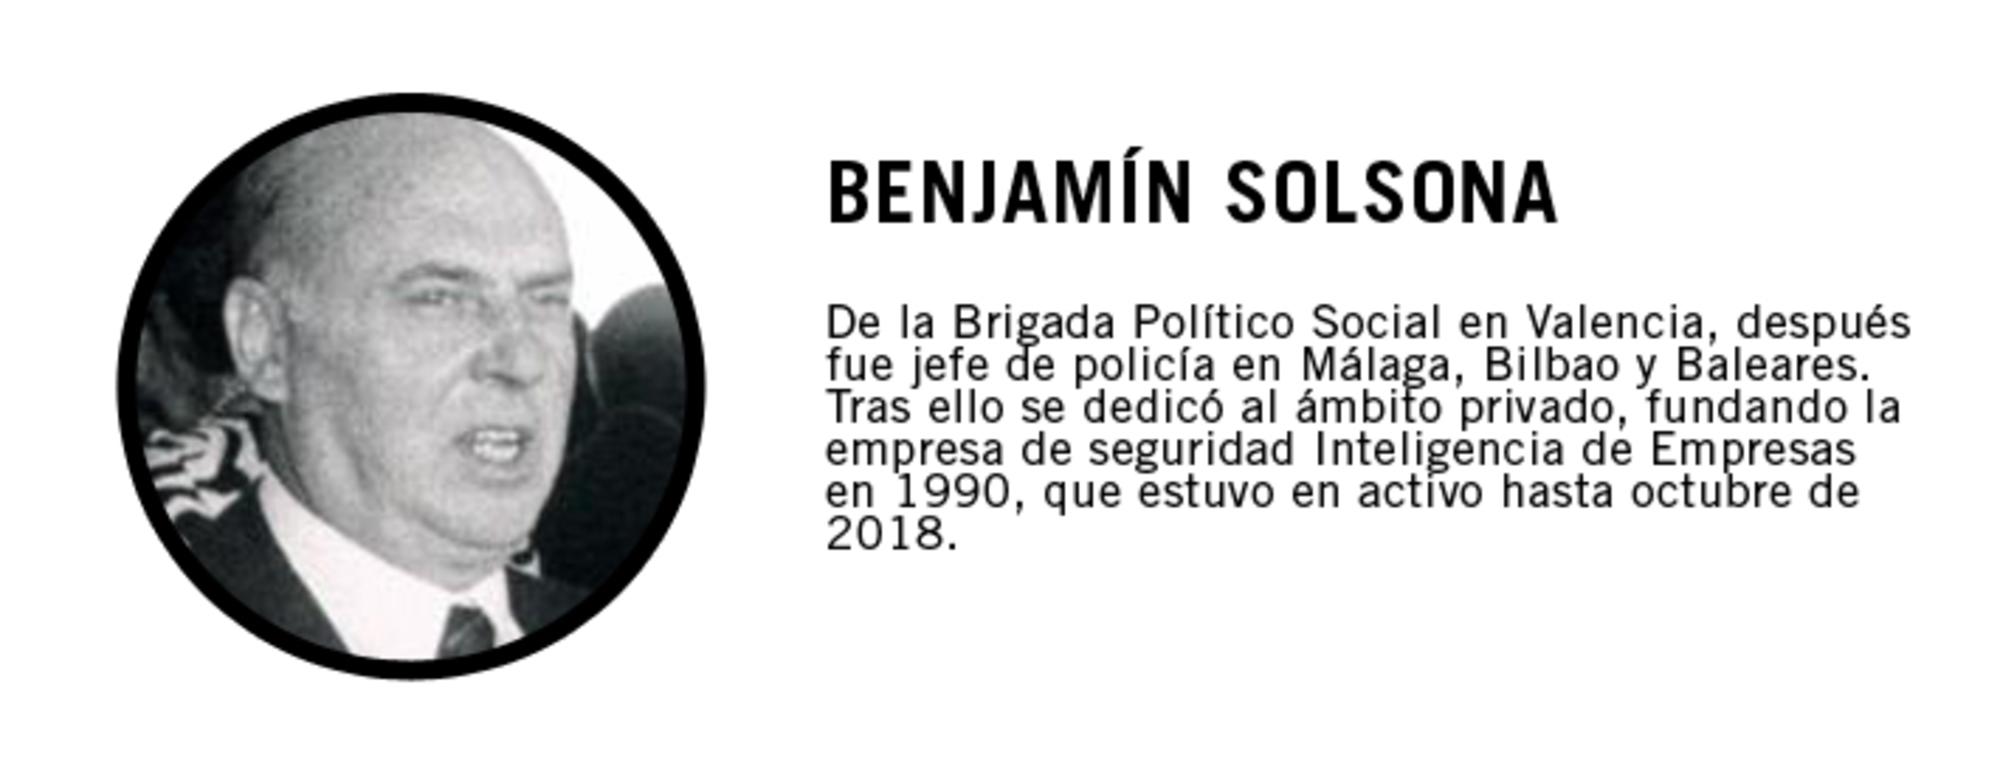 Benjamín Solsona